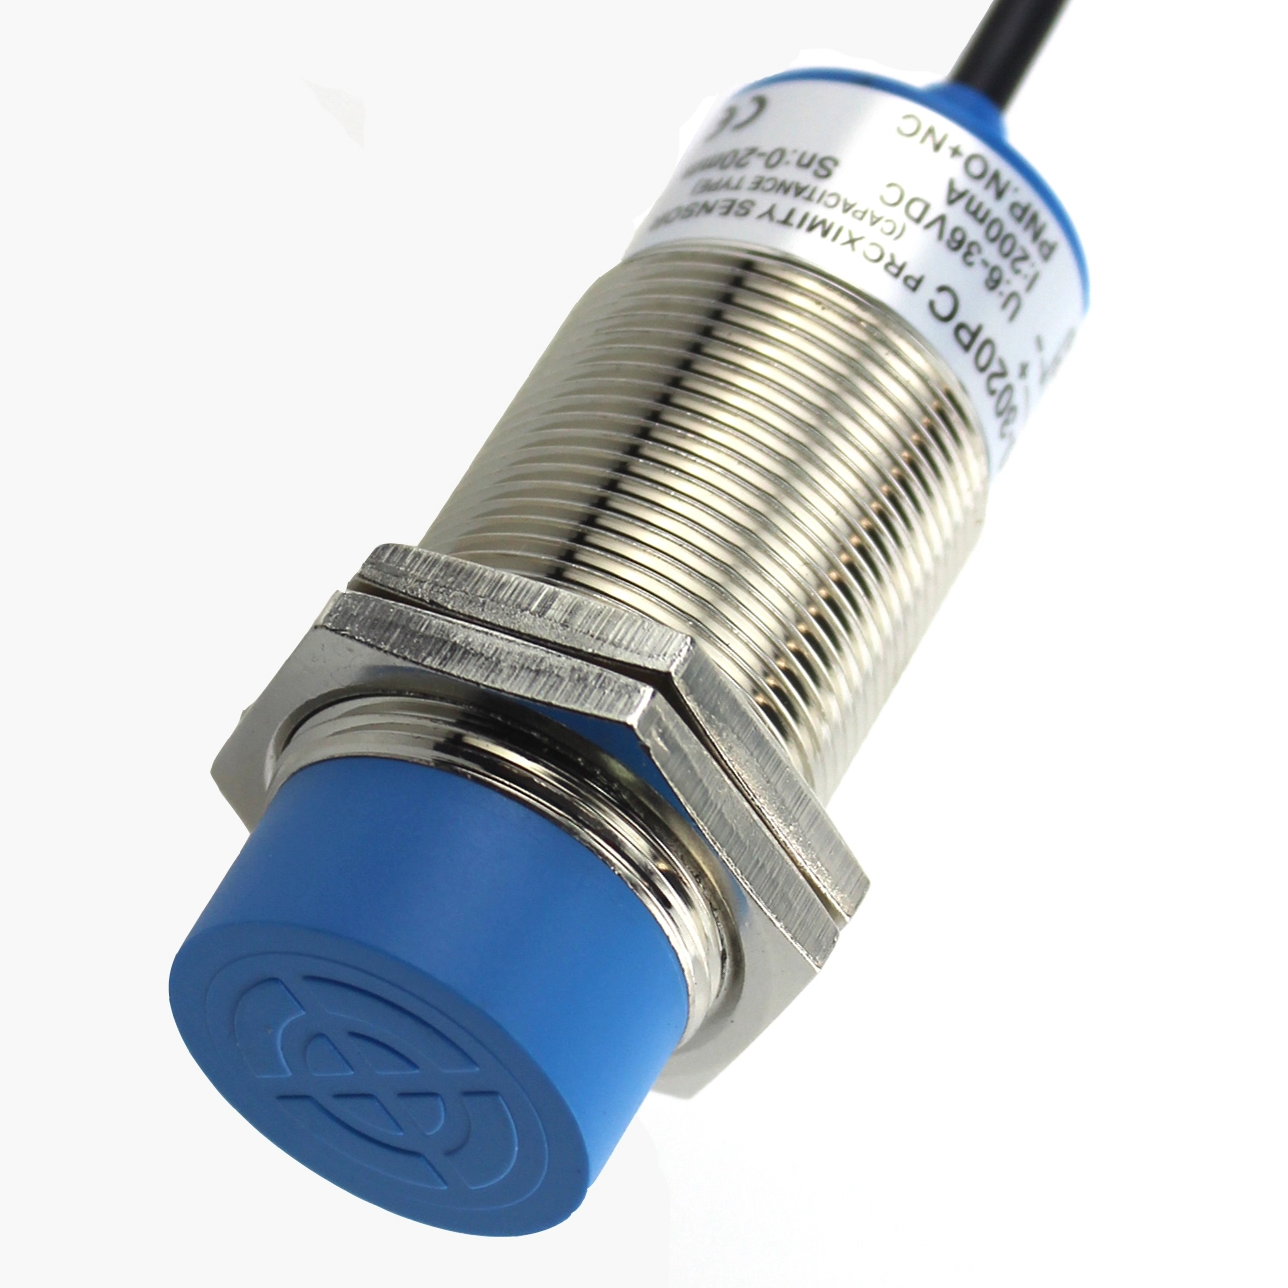 Sensores de proximidad de capacitancia de cuatro cables CM30-3020PC Interruptor de sensor personalizado